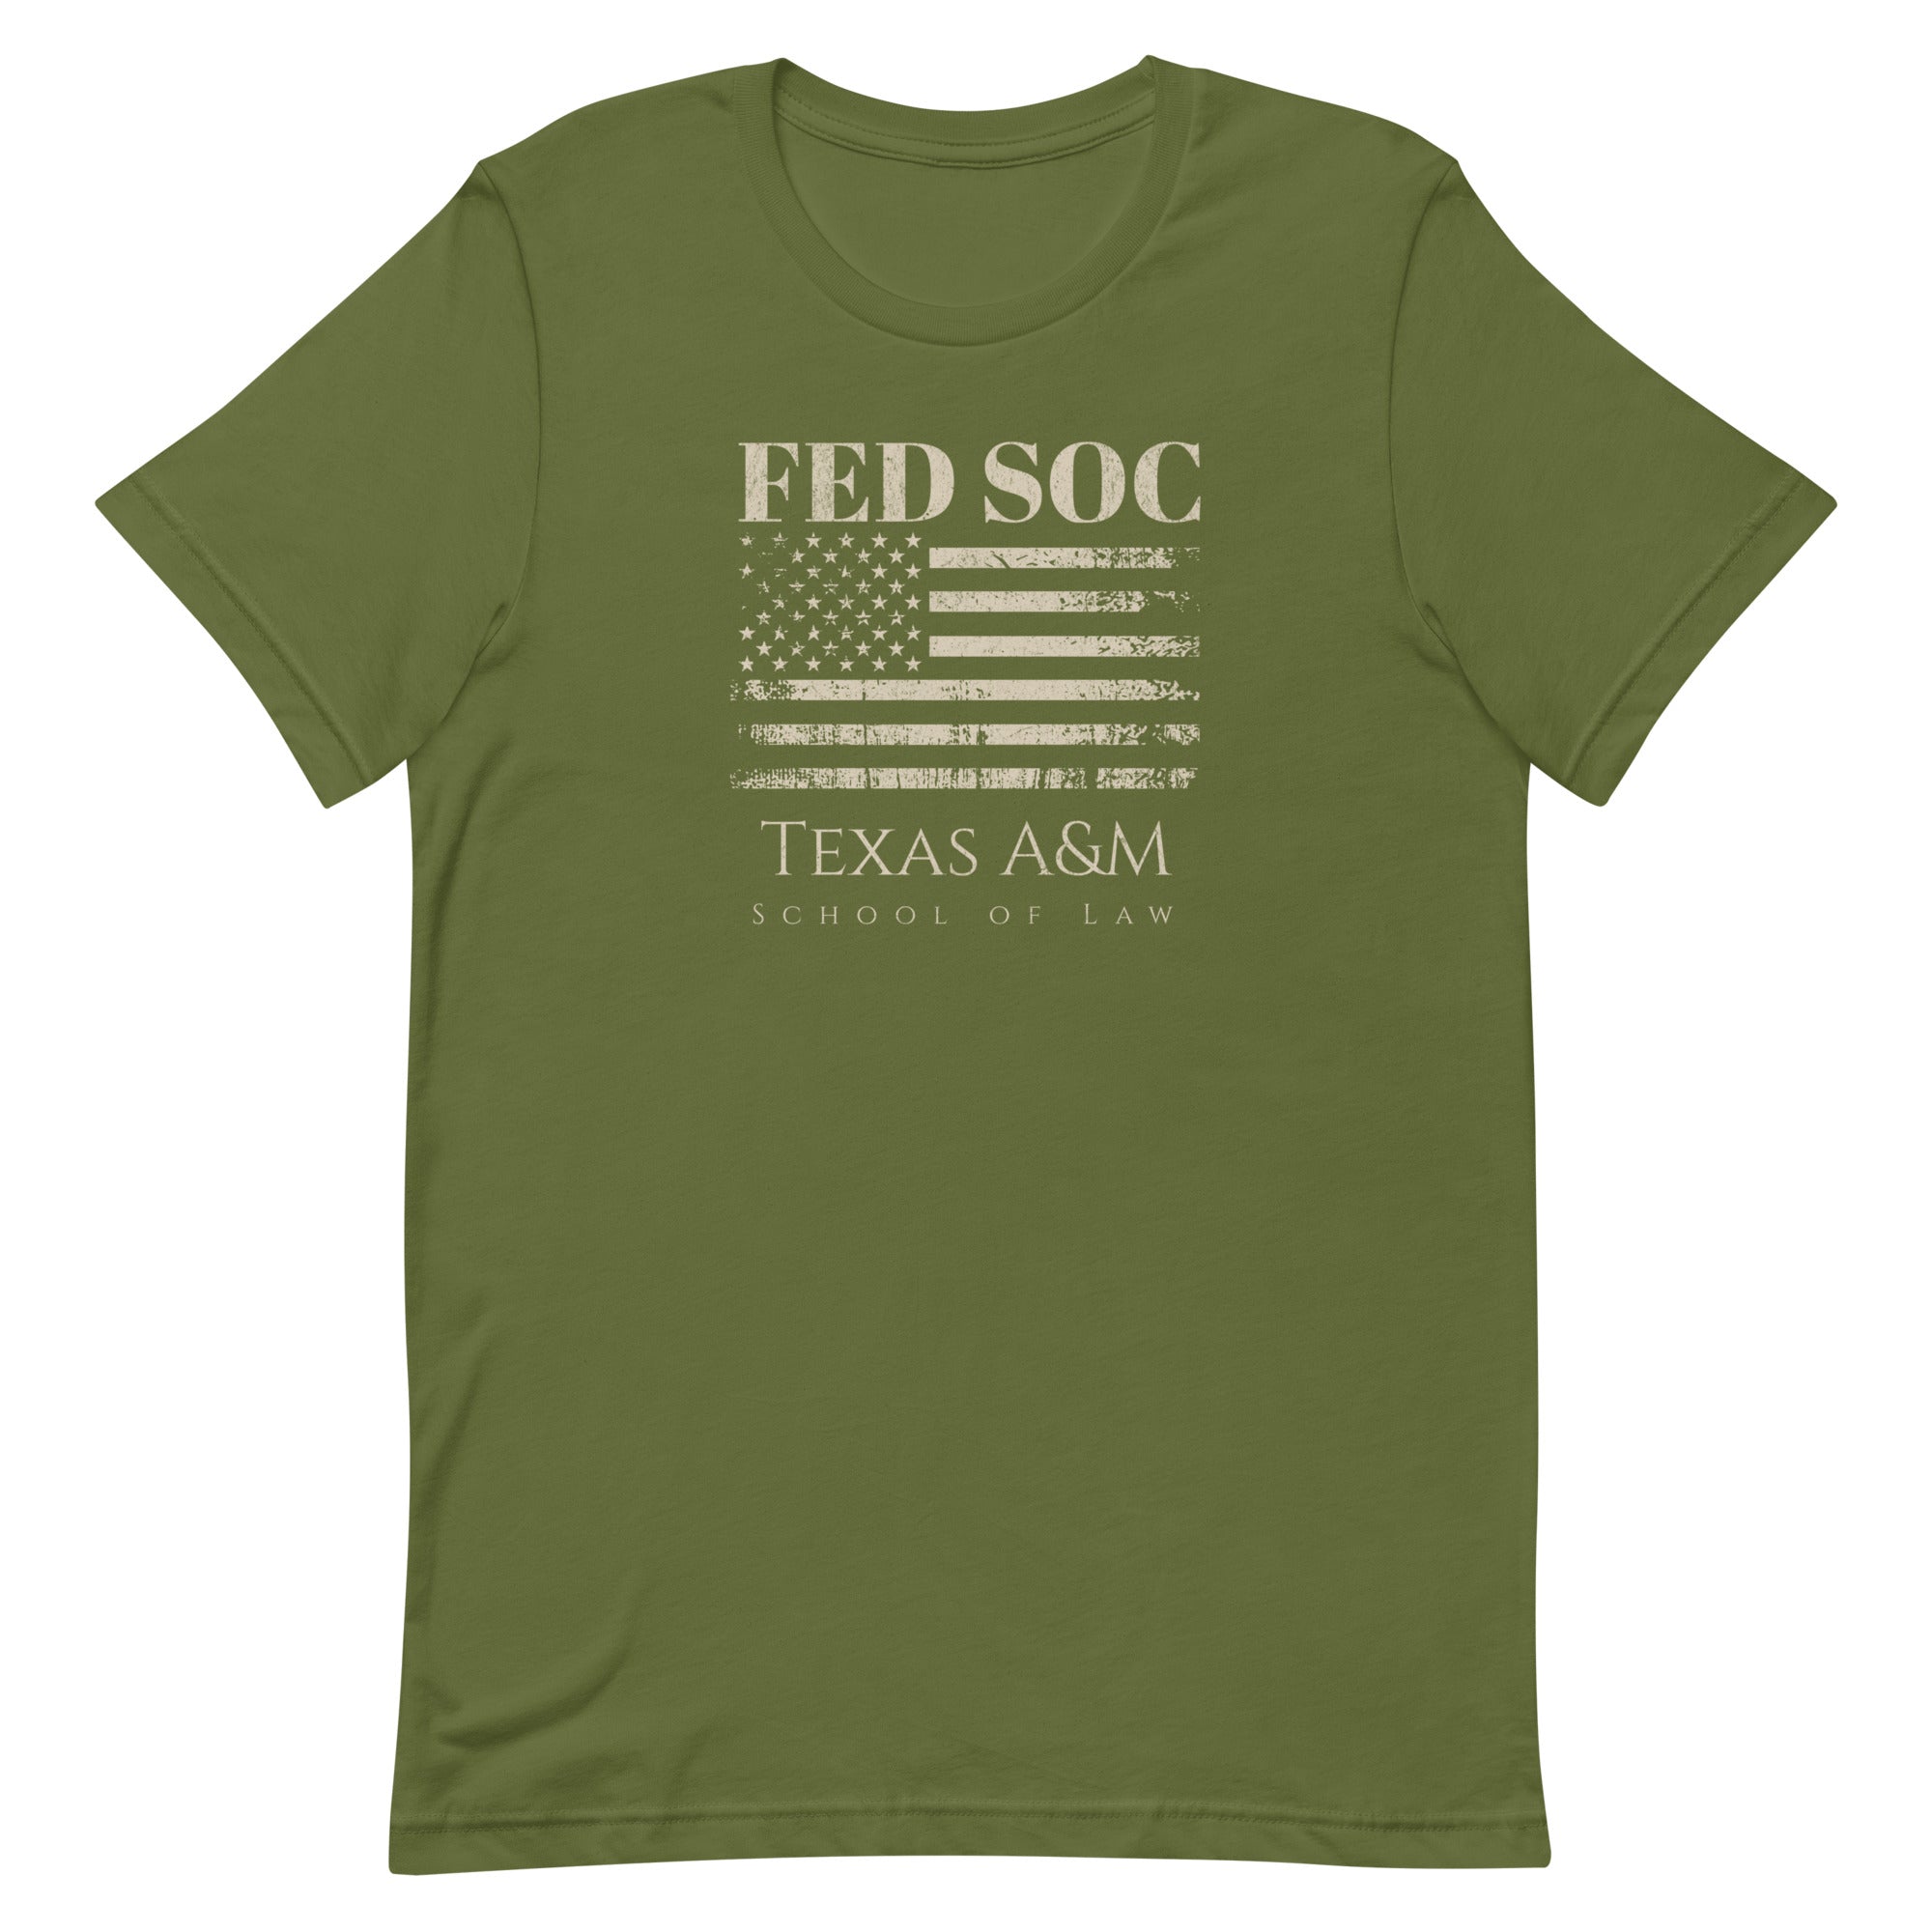 Army Shirt (Texas A&M Fed Soc)